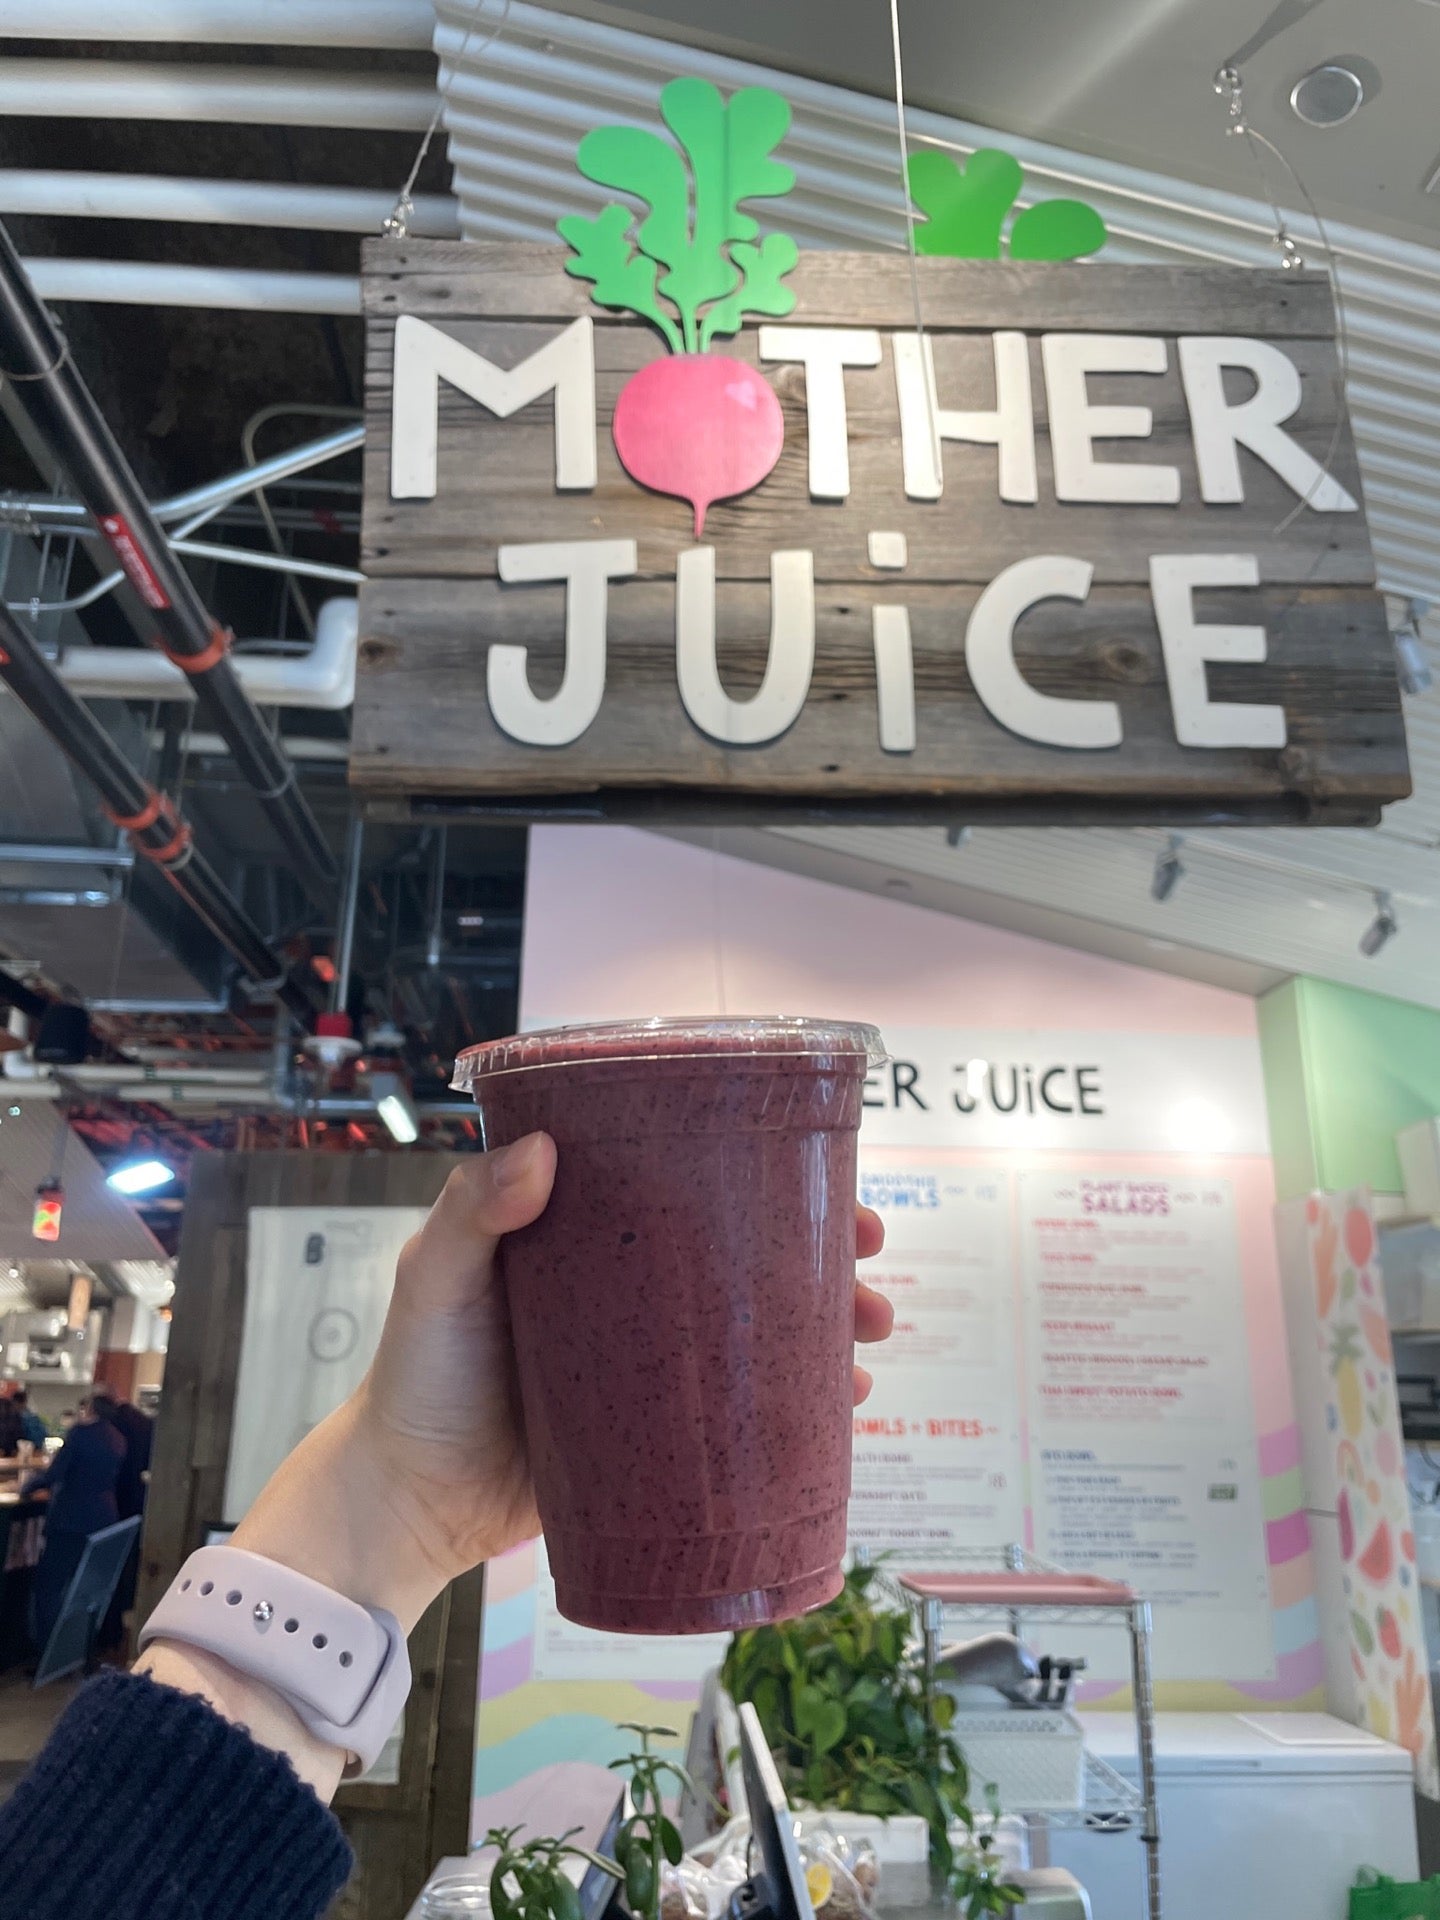 Mother Juice